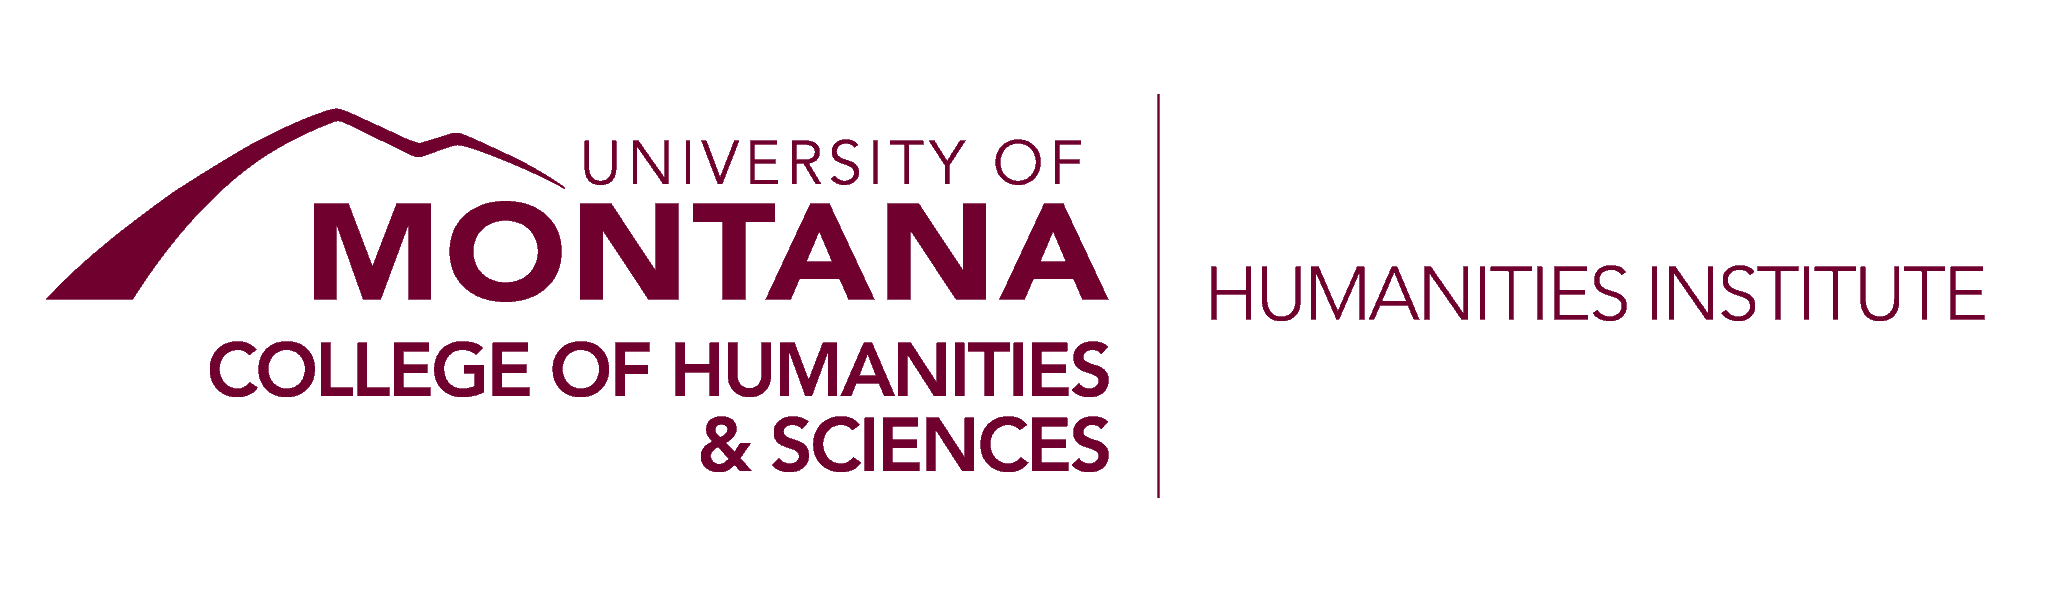 University of Montana Humanities Institute